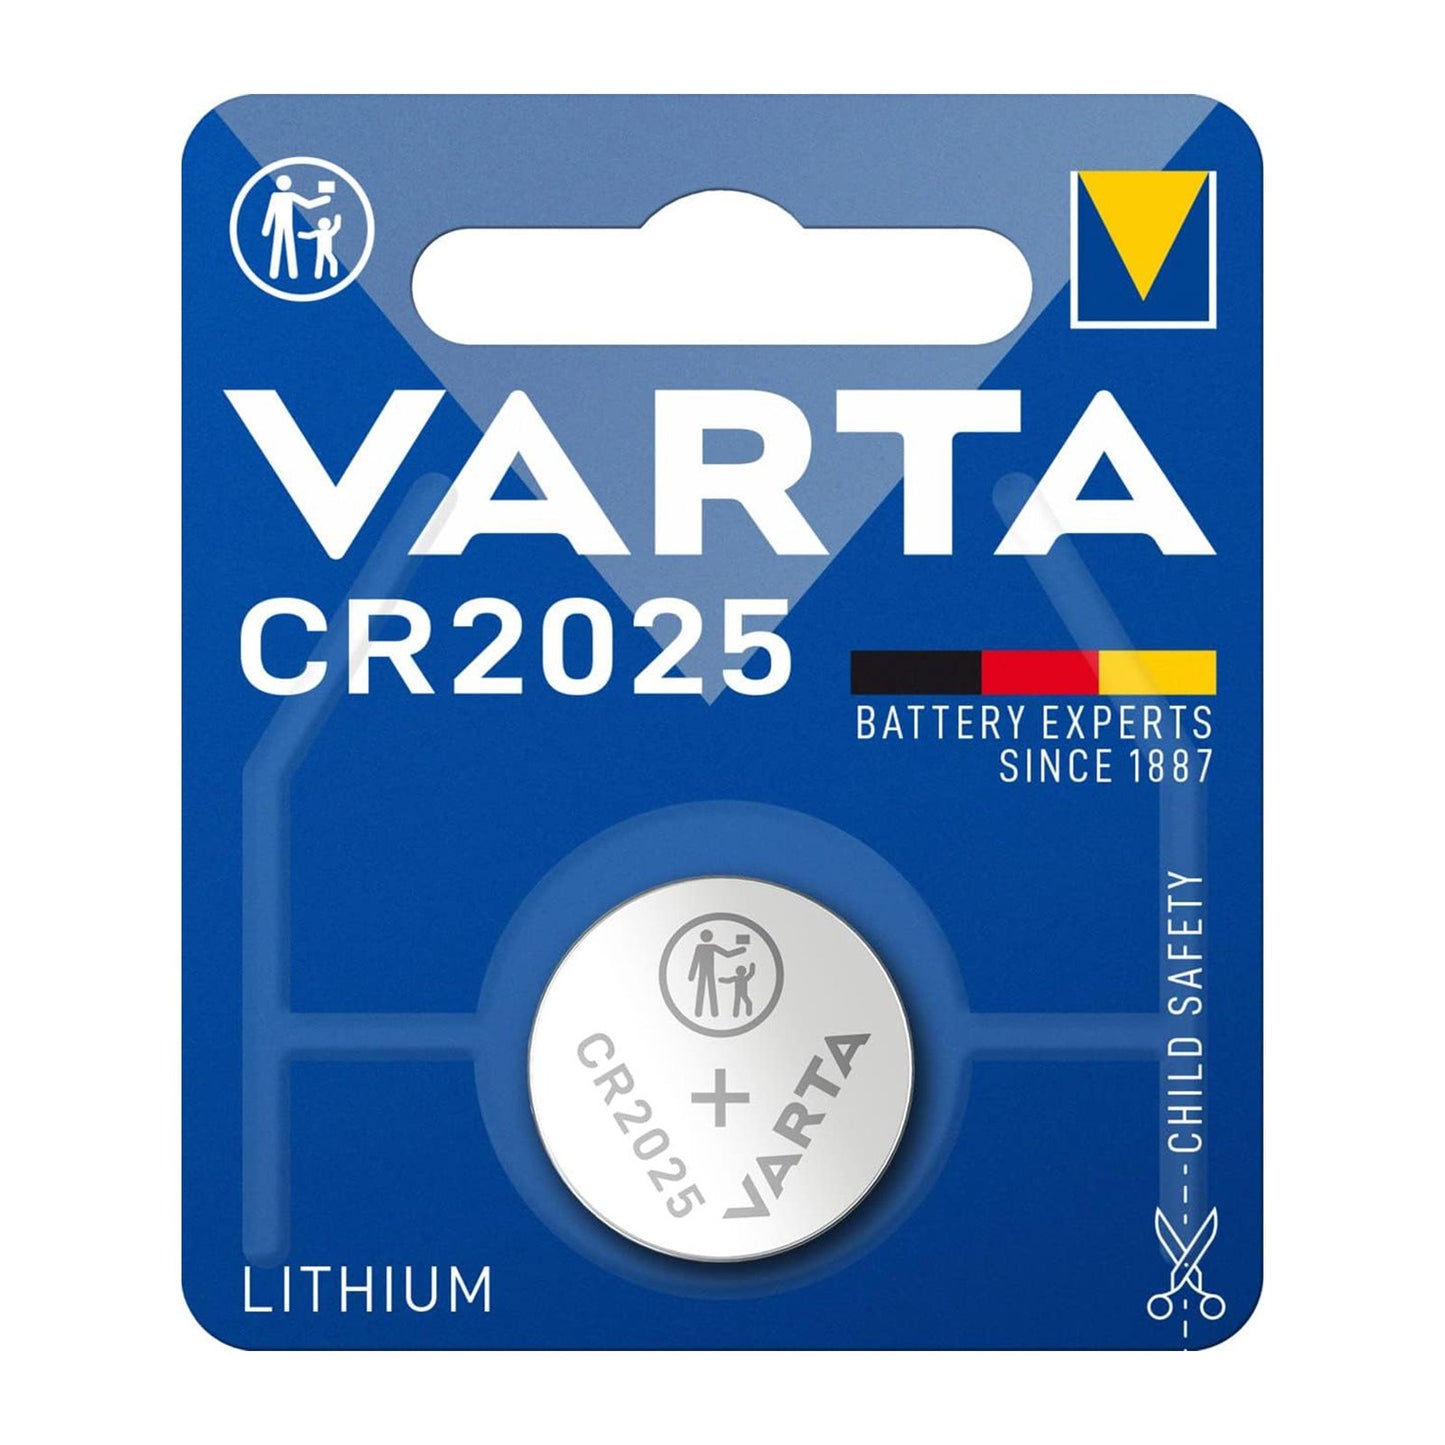 VARTA CR2025 Lithium coin cell battery 3V, flat cell, specialist, Diameter 20mm